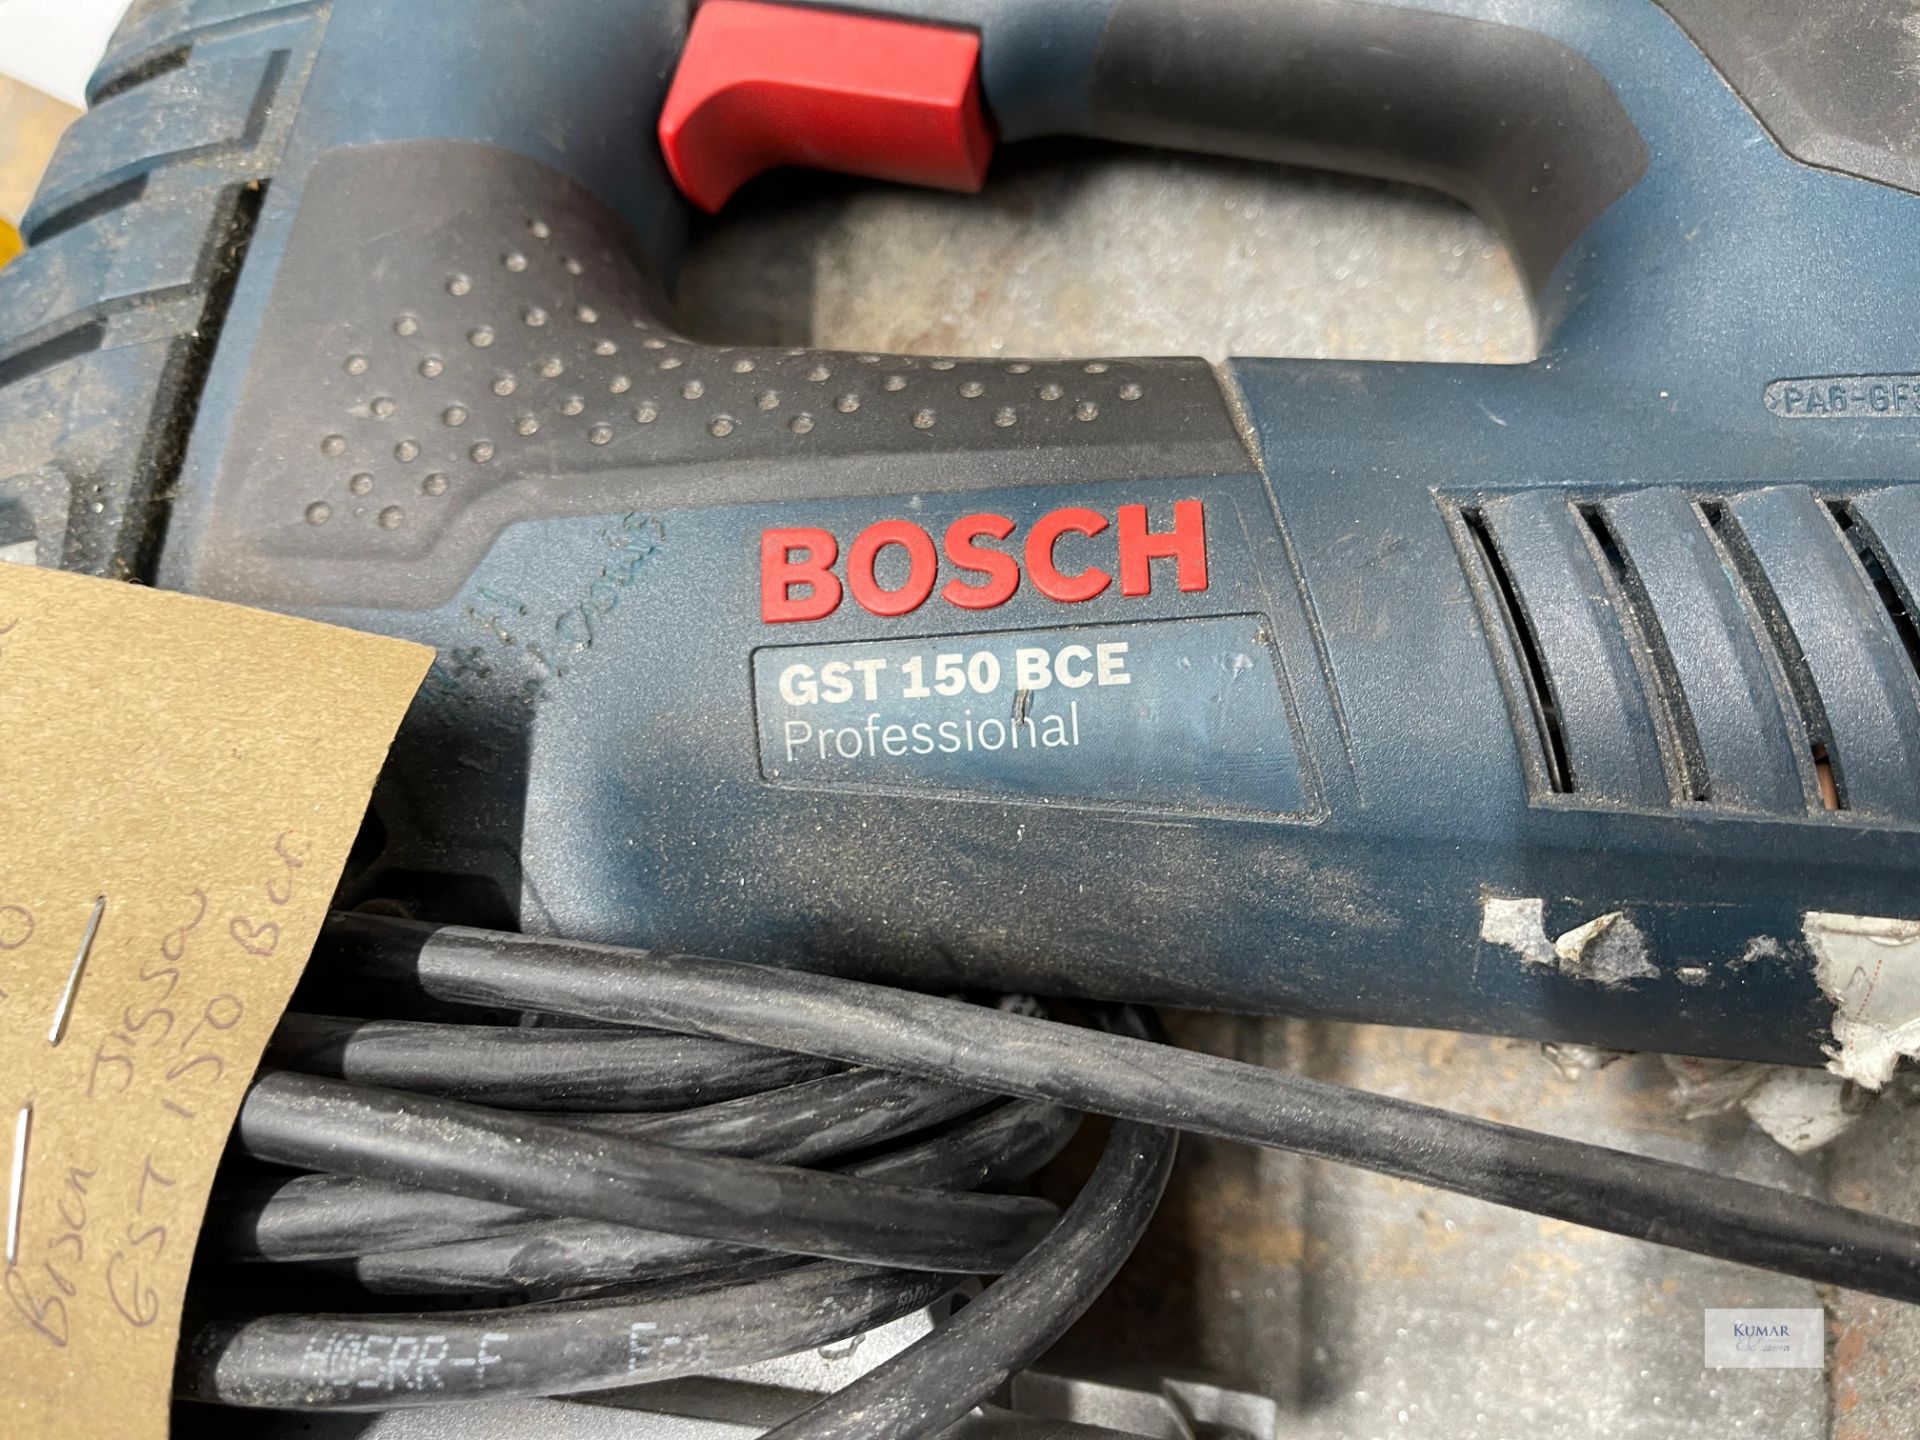 Bosch Professional GST 150 BCE, 110V Corded Jigsaw - Image 2 of 5